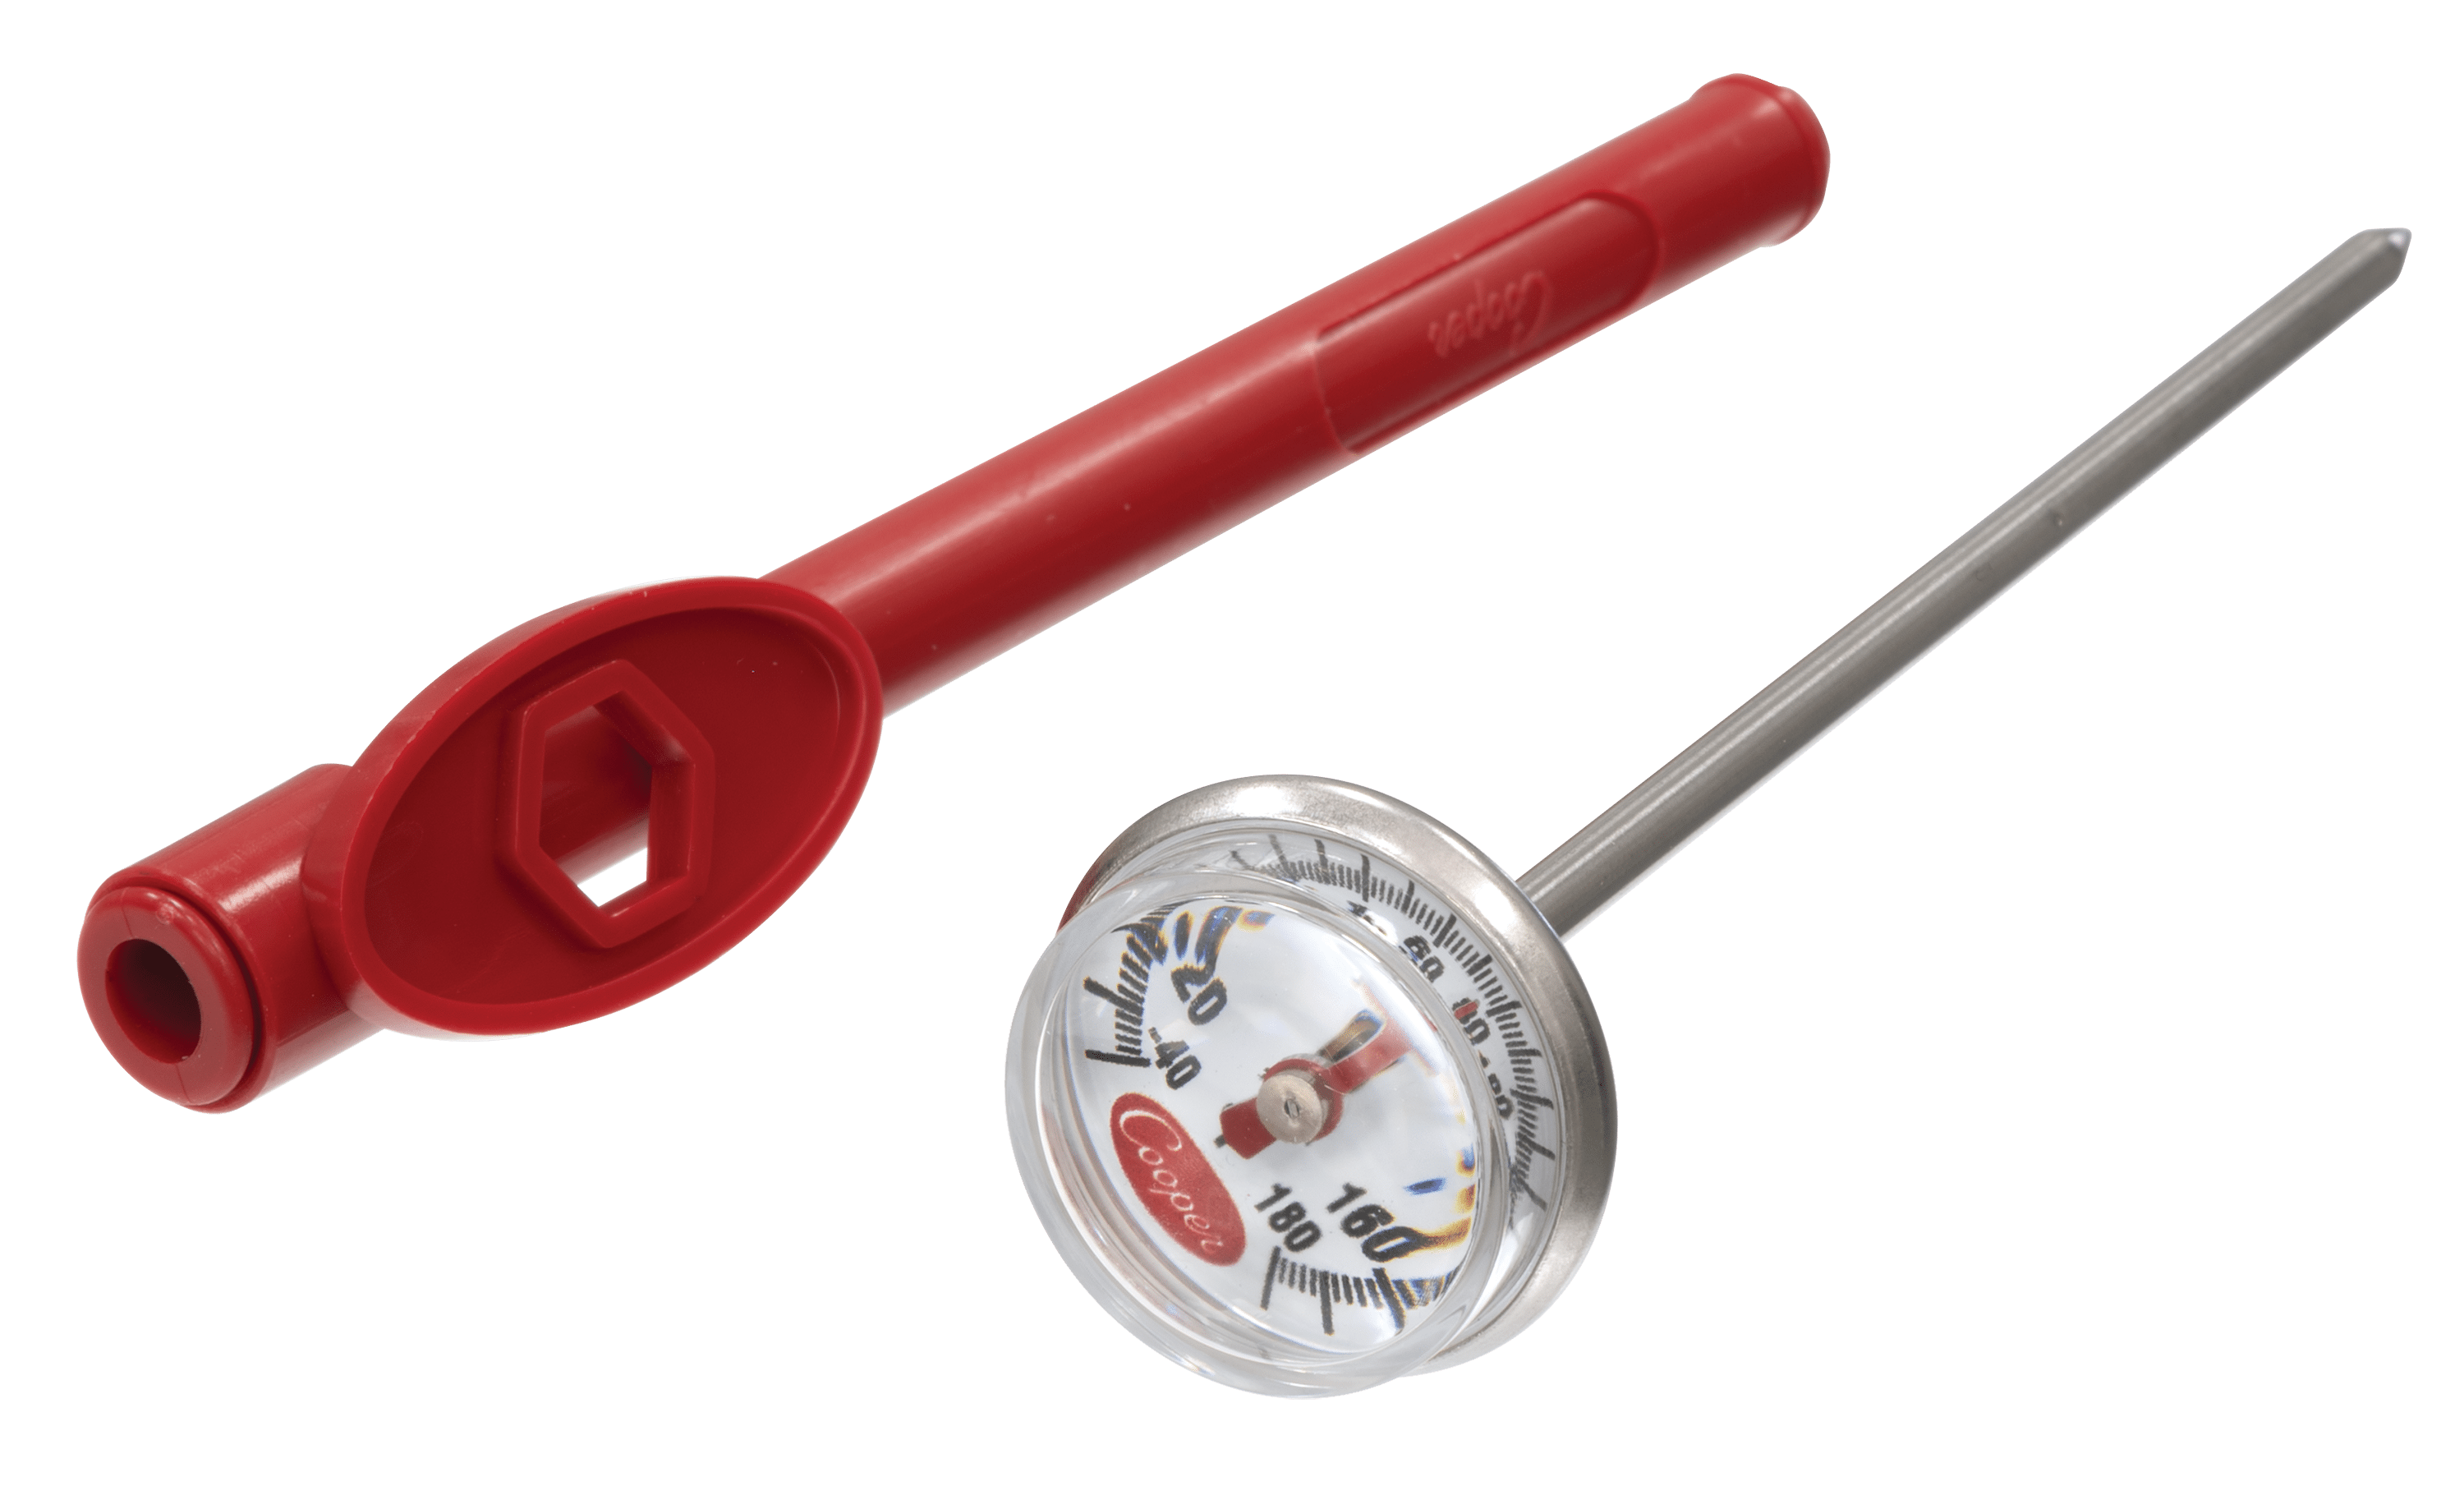 Dial Pocket Thermometer 25-125F - The Vintner Vault